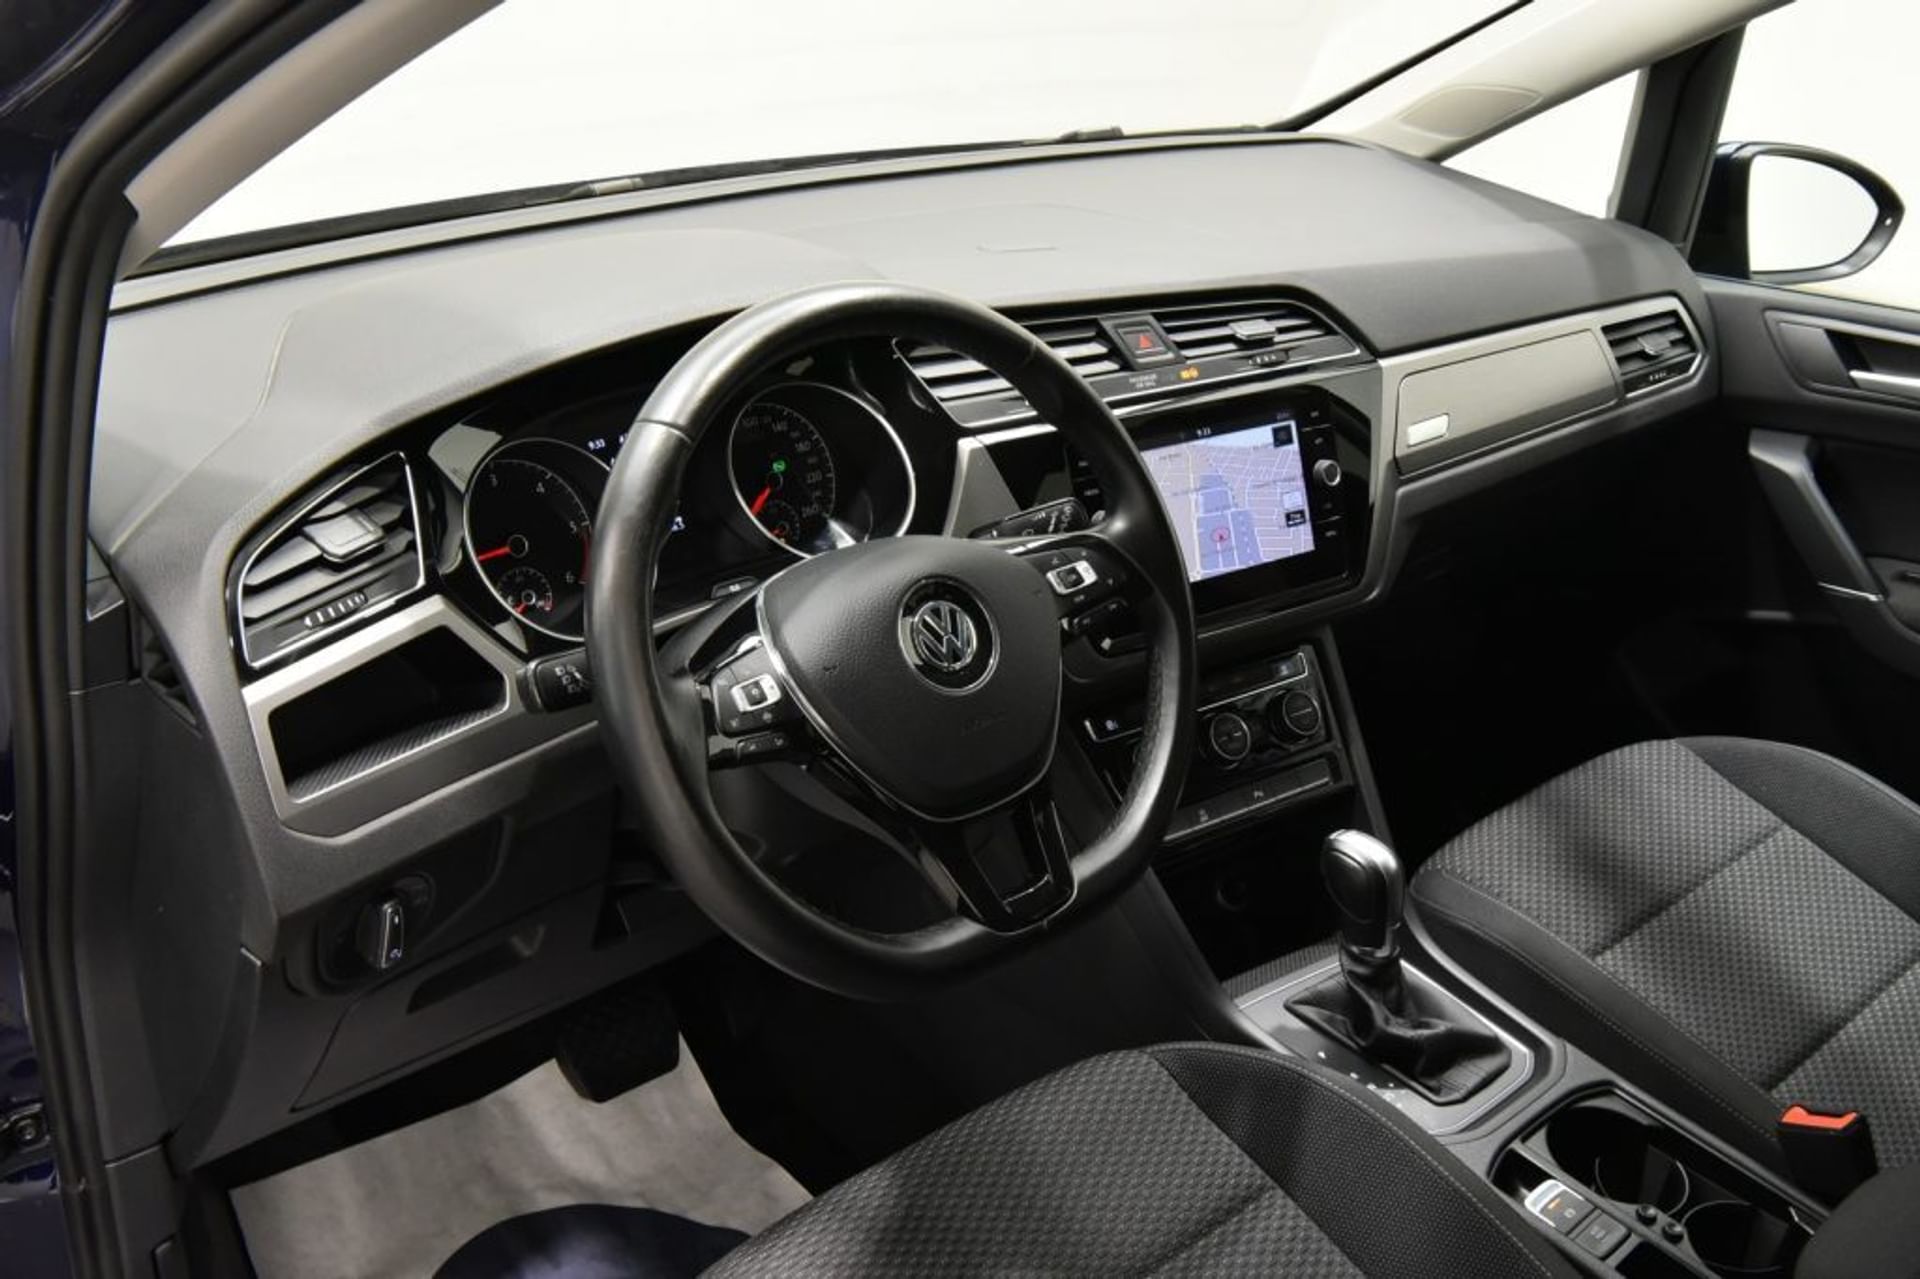 Volkswagen 1.6 TDI 115 CV - Cruscotto